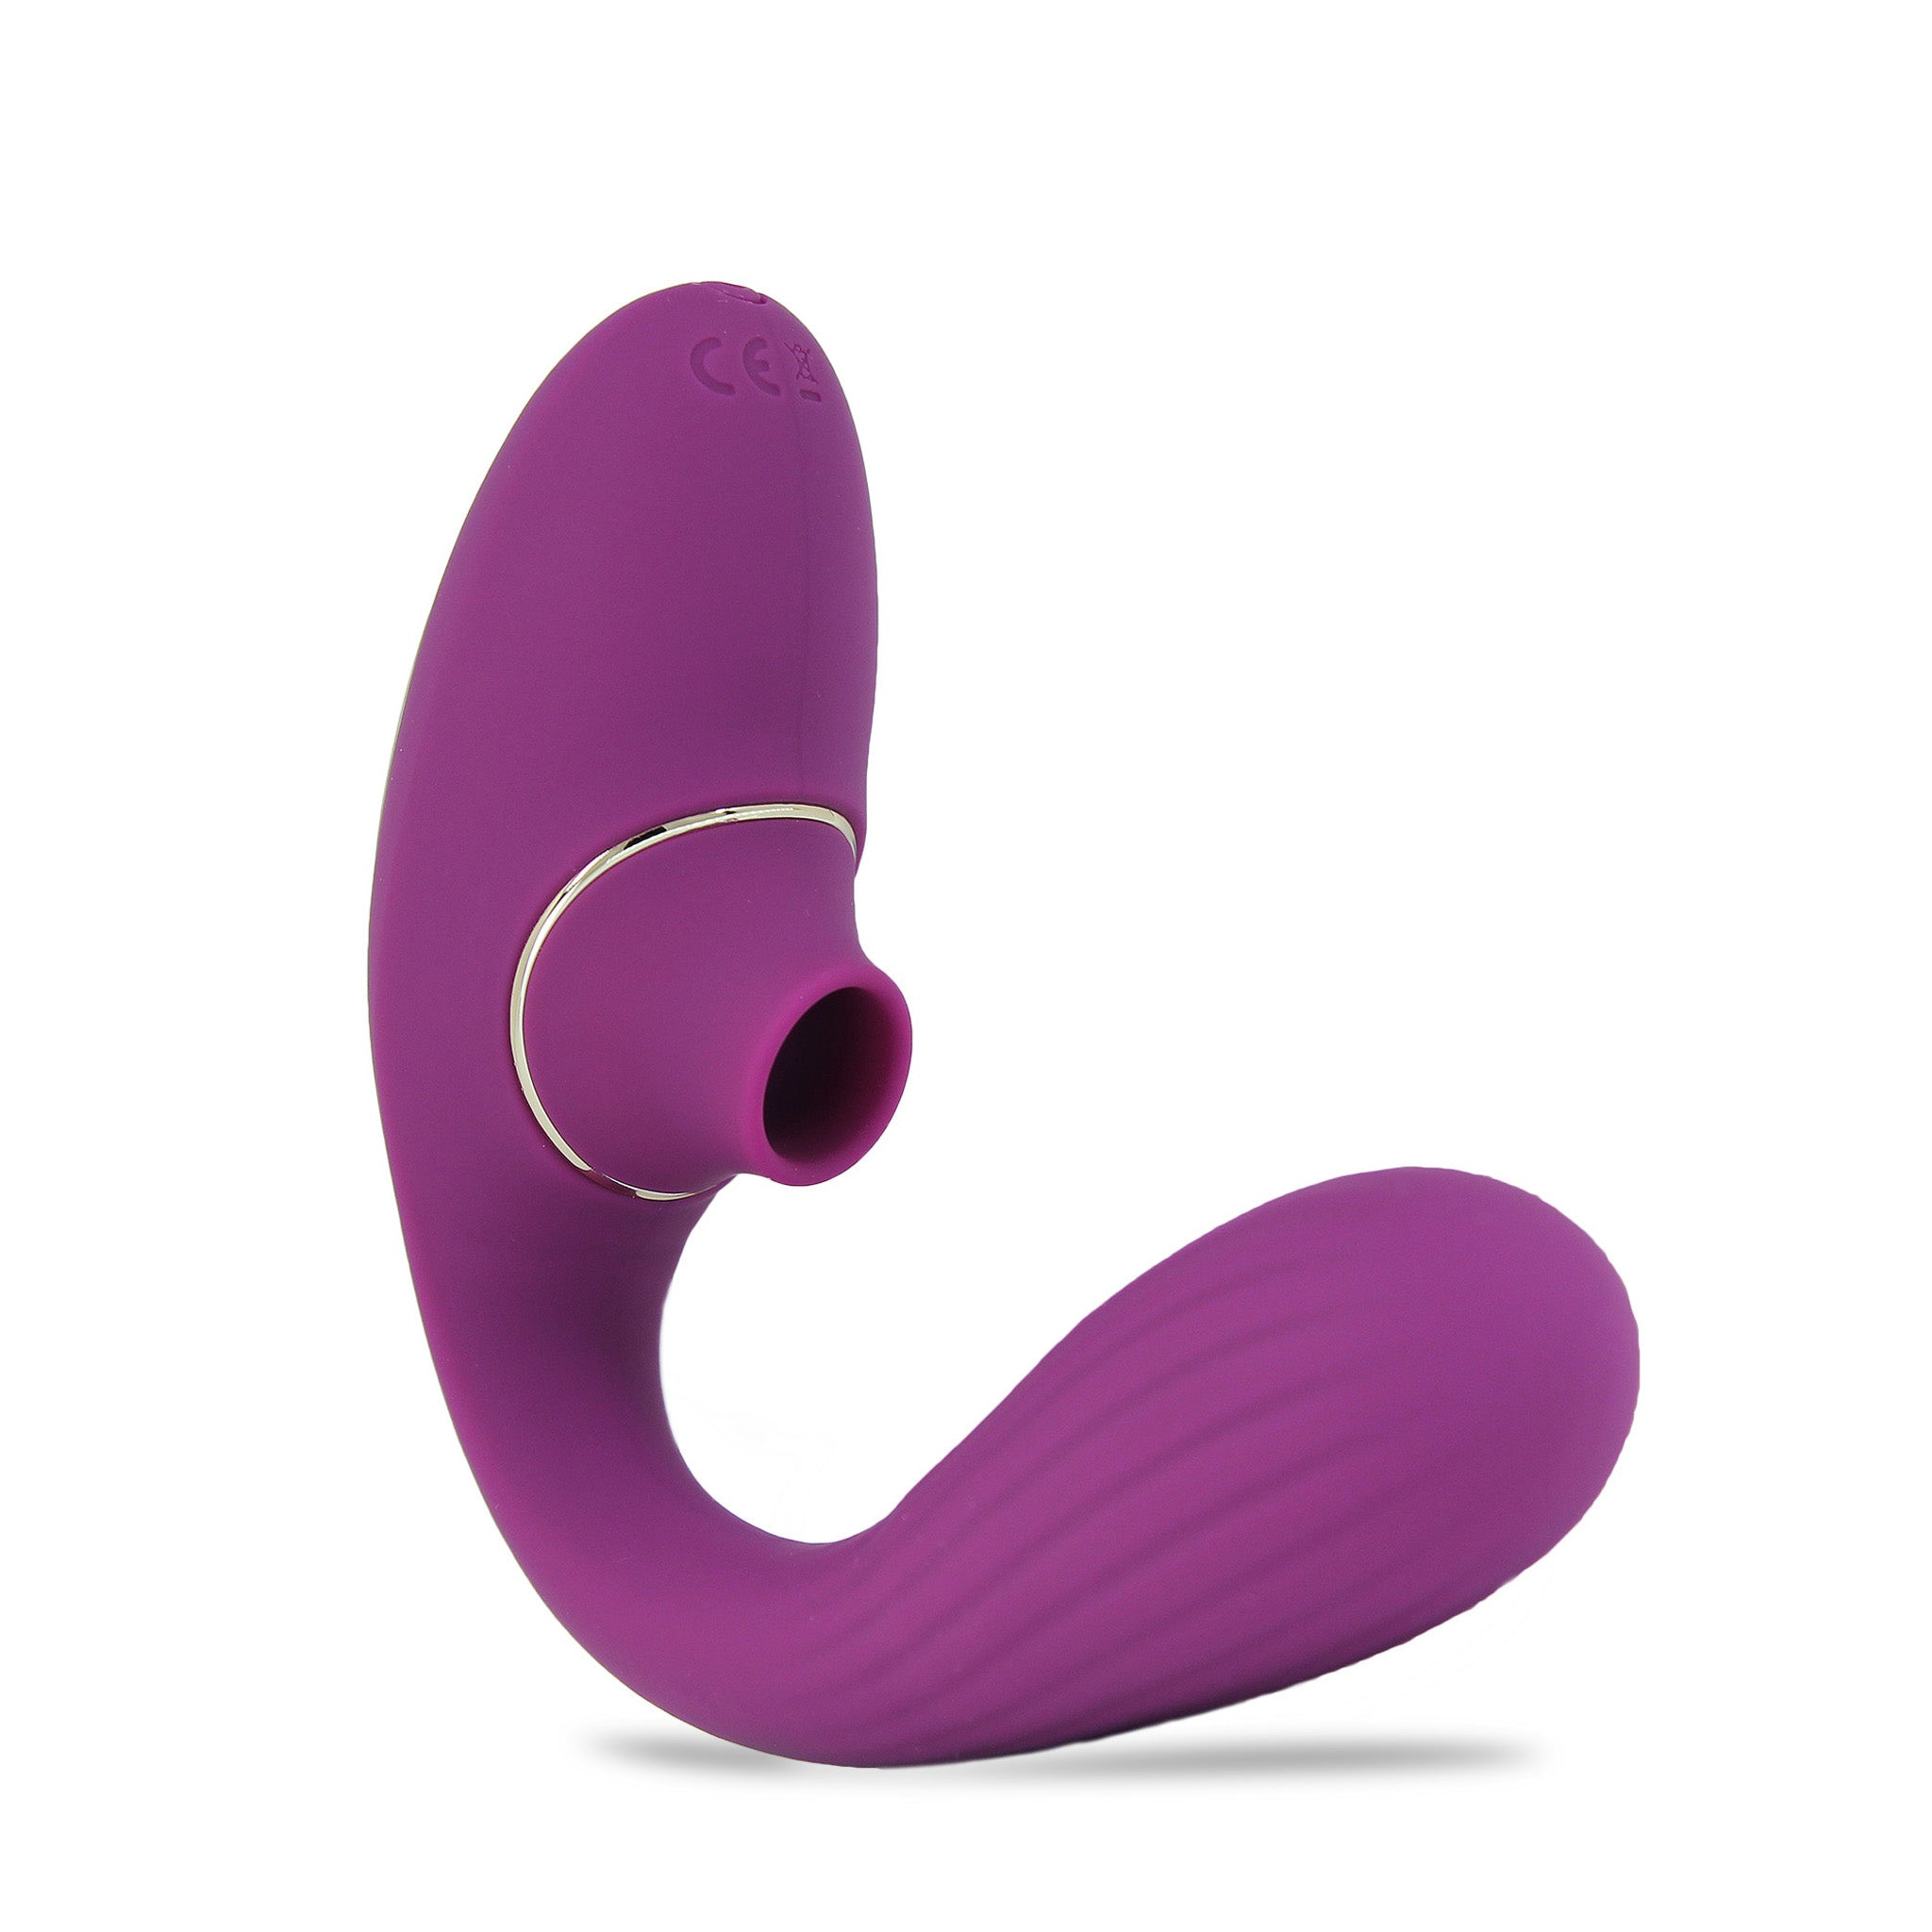 Rechargeable Clit Sucking G-spot Rabbit Vibrator Dildo Sex-toys for Women Couple